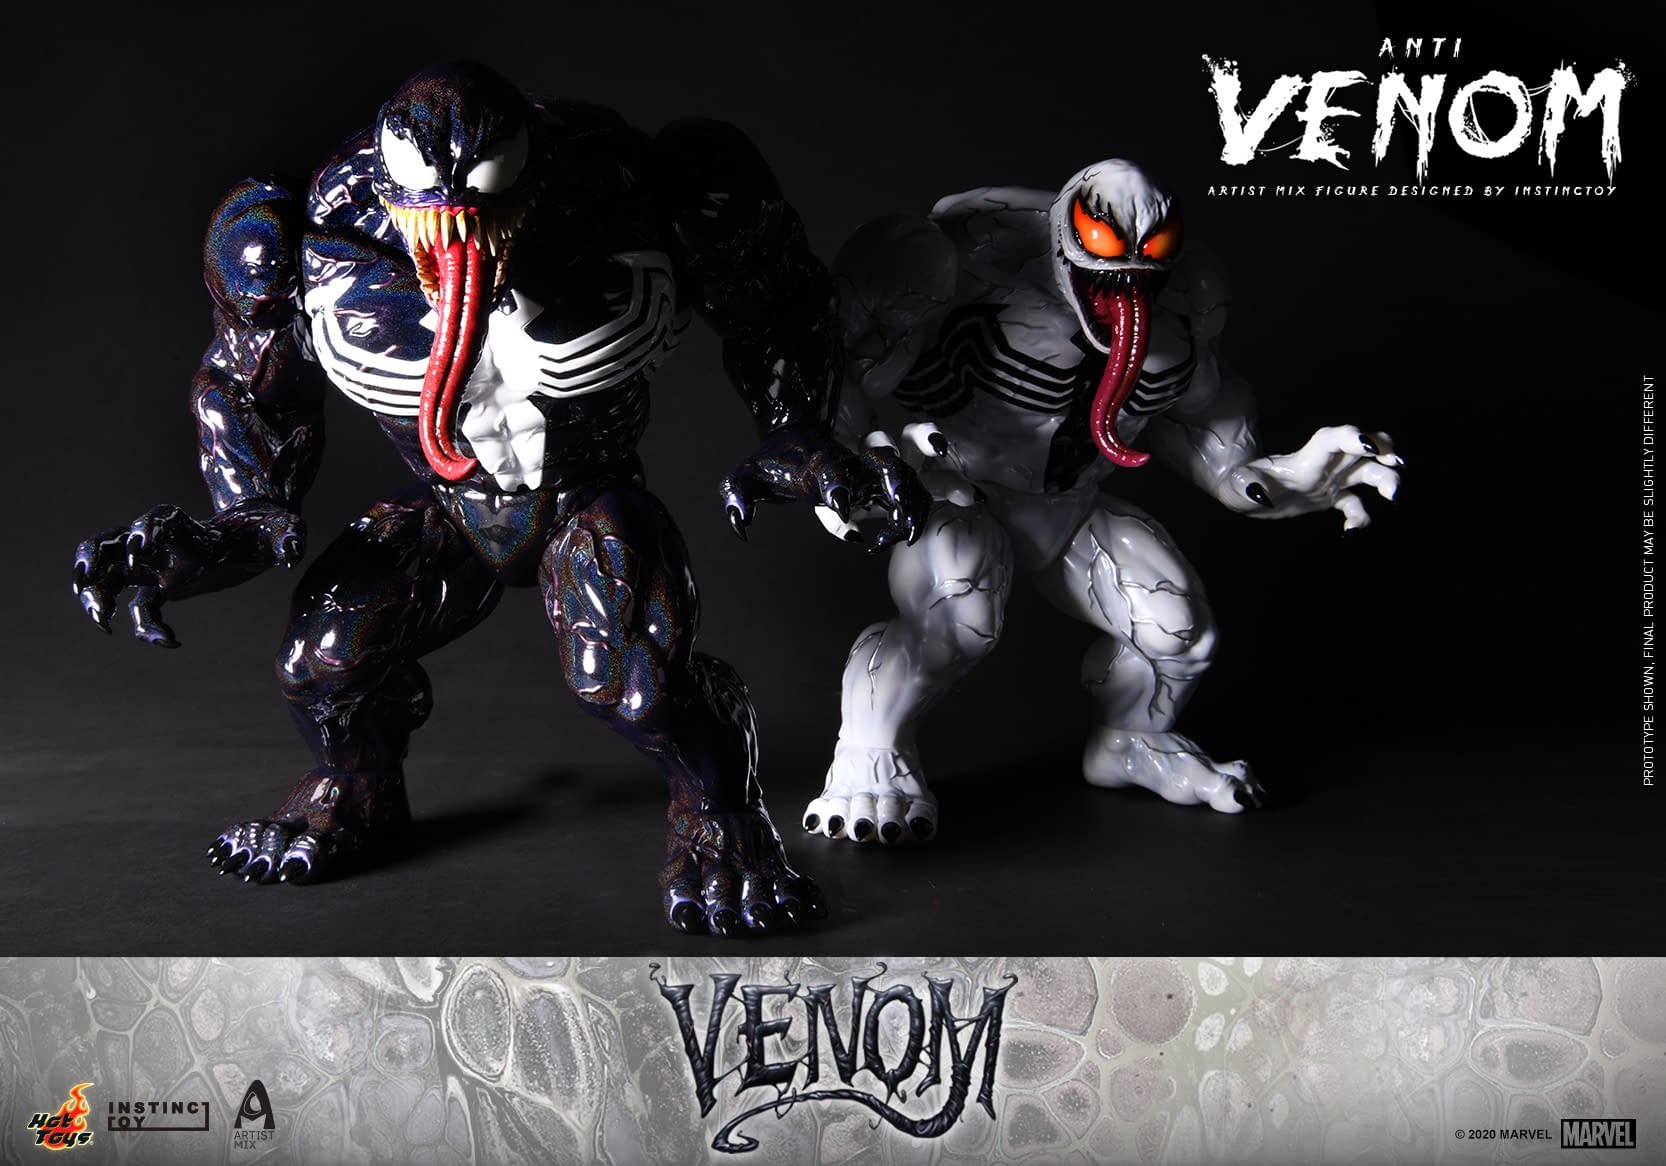 2018 Marvel Now Venom Edward Brock PVC Artfx Statue Figure Collectible Model Toy